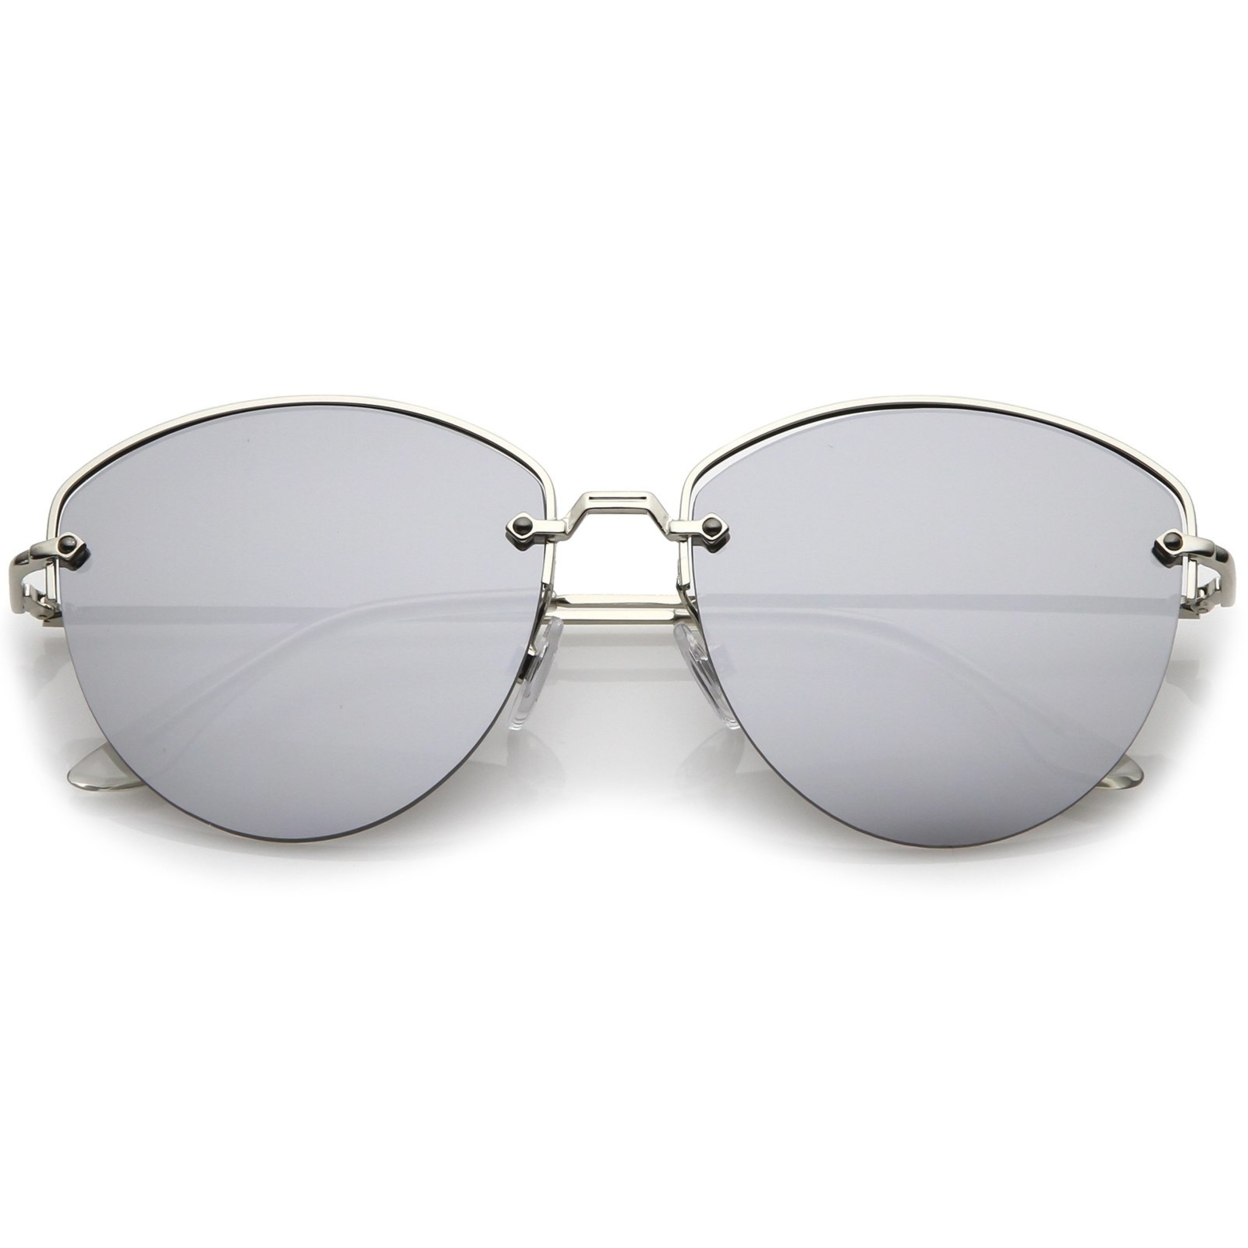 Modern Metal Nose Bridge Mirrored Flat Lens Semi-Rimless Sunglasses 60mm - Black / Purple Mirror